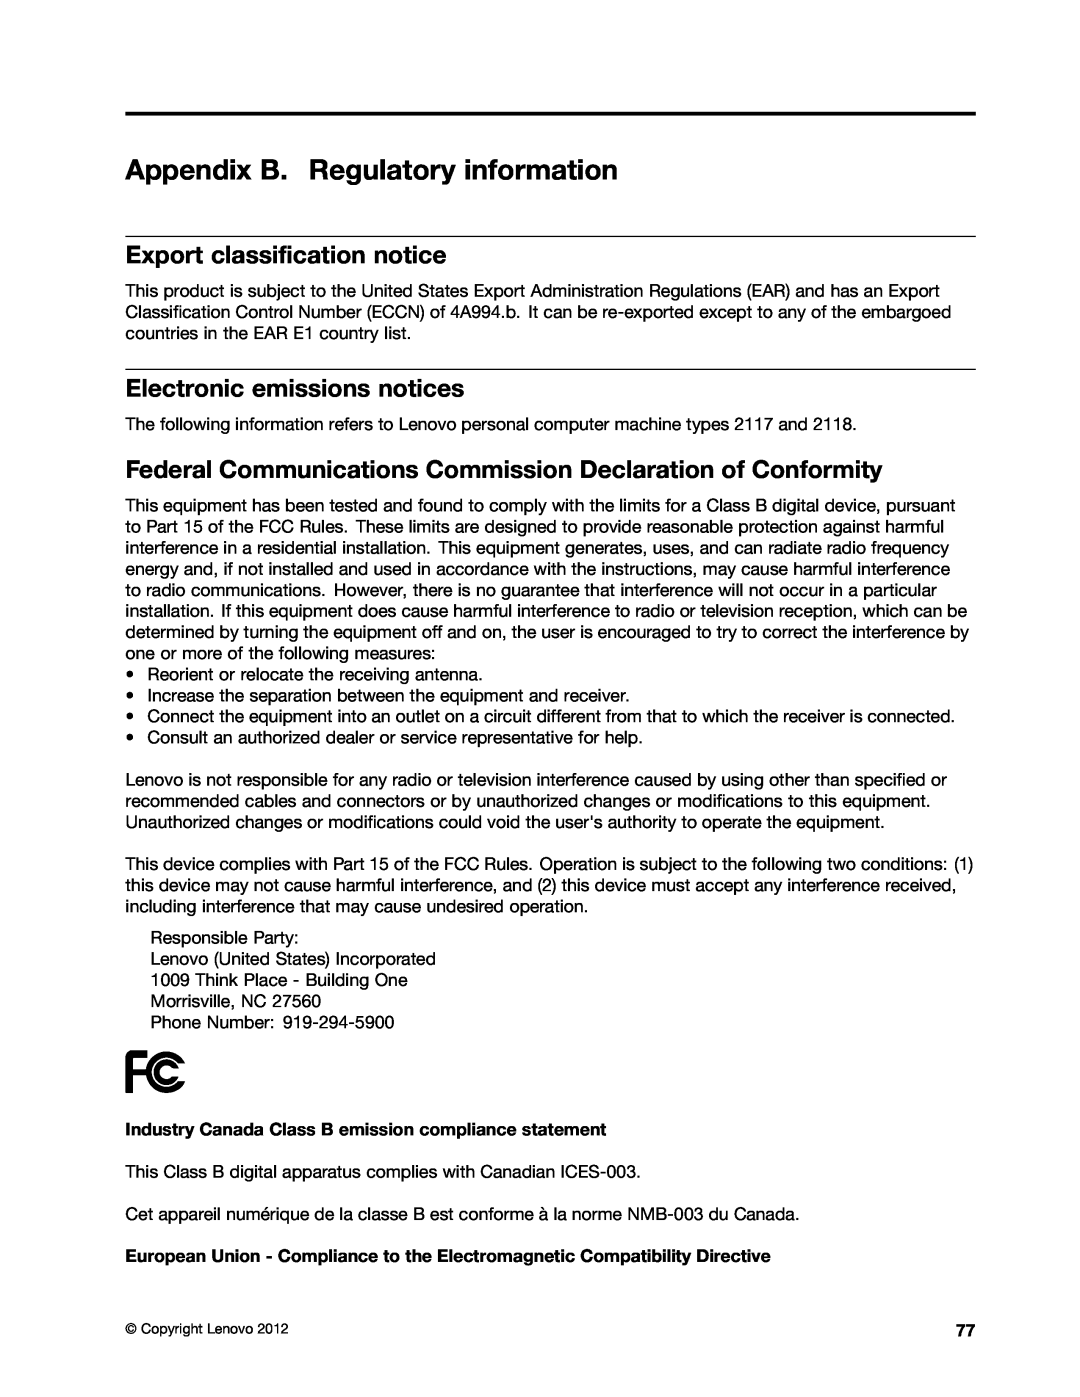 Lenovo 2117EKU manual Appendix B. Regulatory information, Export classification notice, Electronic emissions notices 